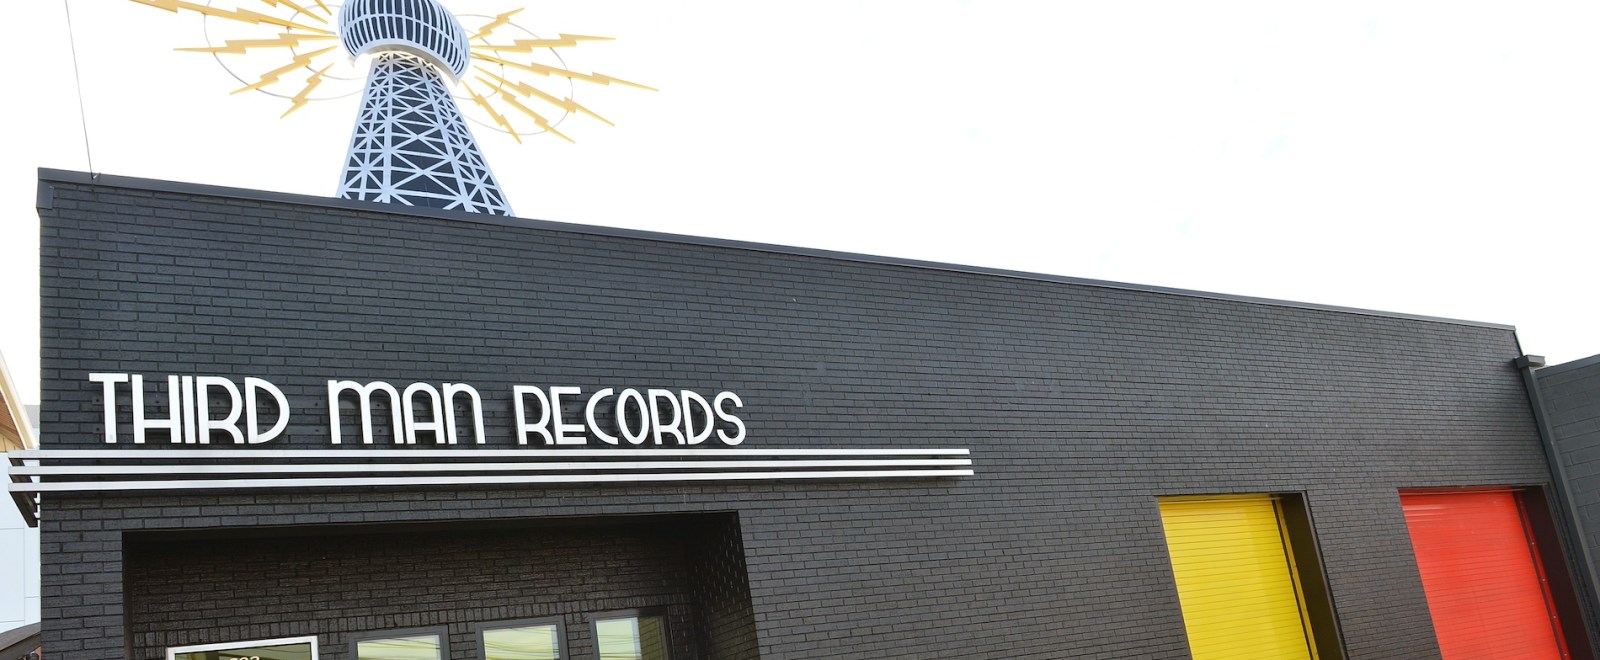 third-man-records-store-building-getty-full.jpg